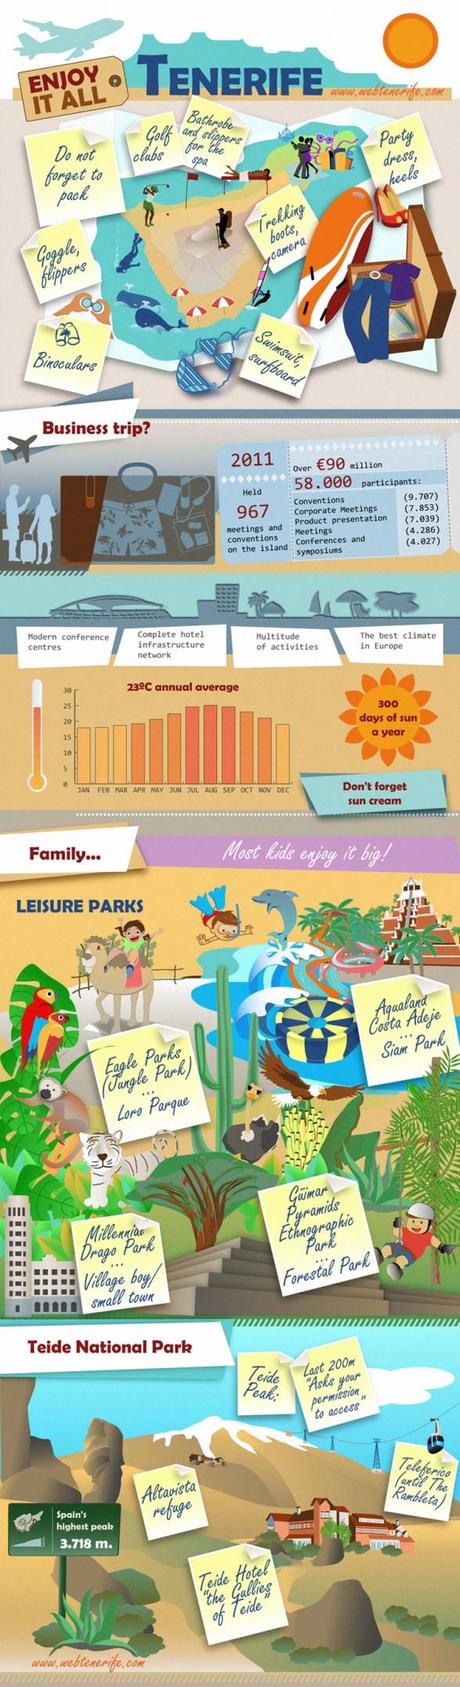 how to enjoy your holiday 50bdd5e125882 w587 Fantástica infografía sobre Tenerife: How to enjoy it all 